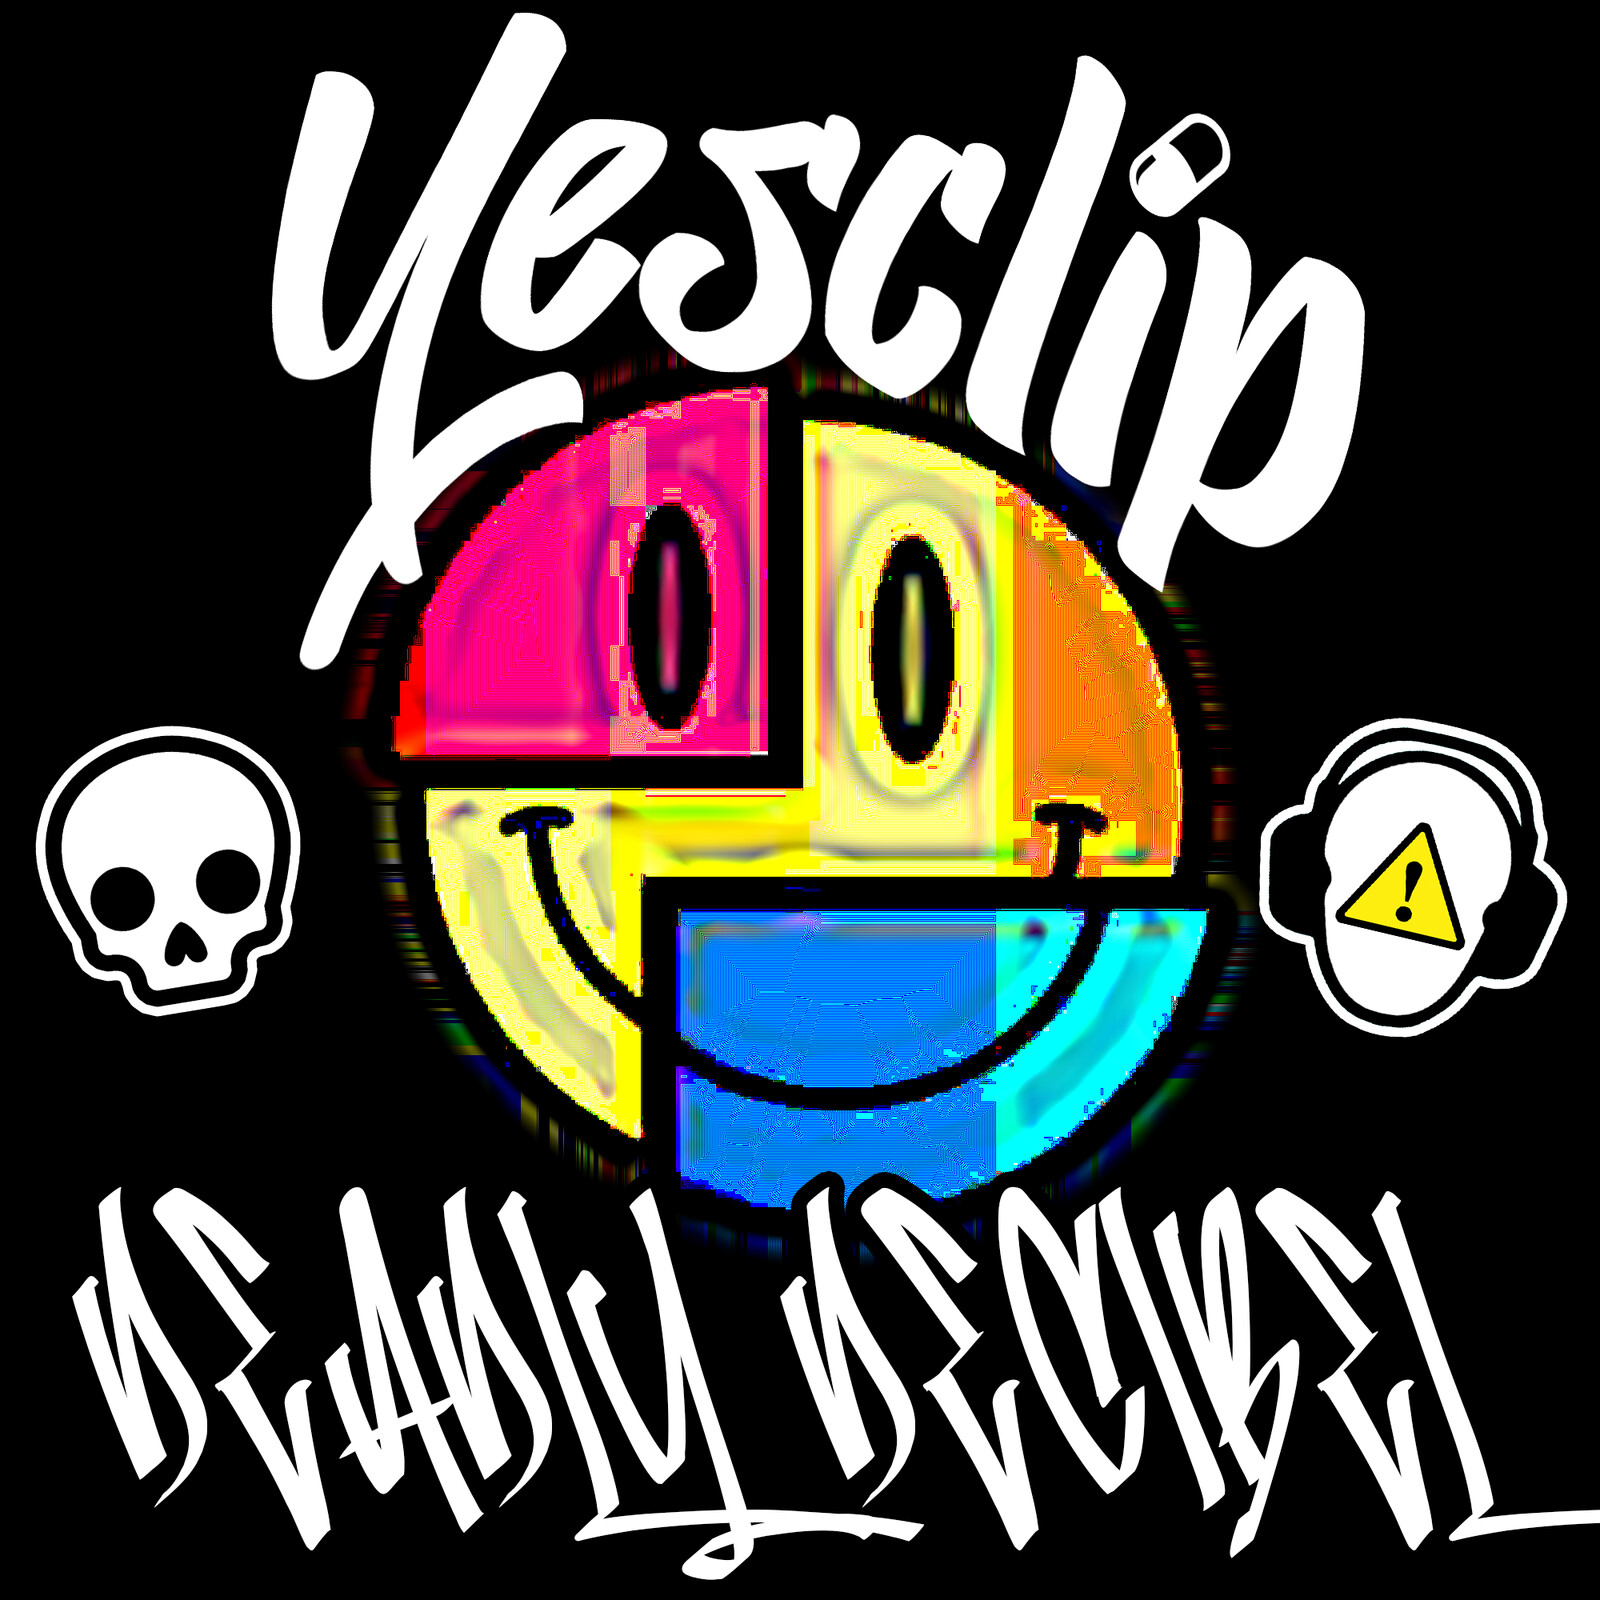 the second YESCLIP album: DEADLY DECIBEL.